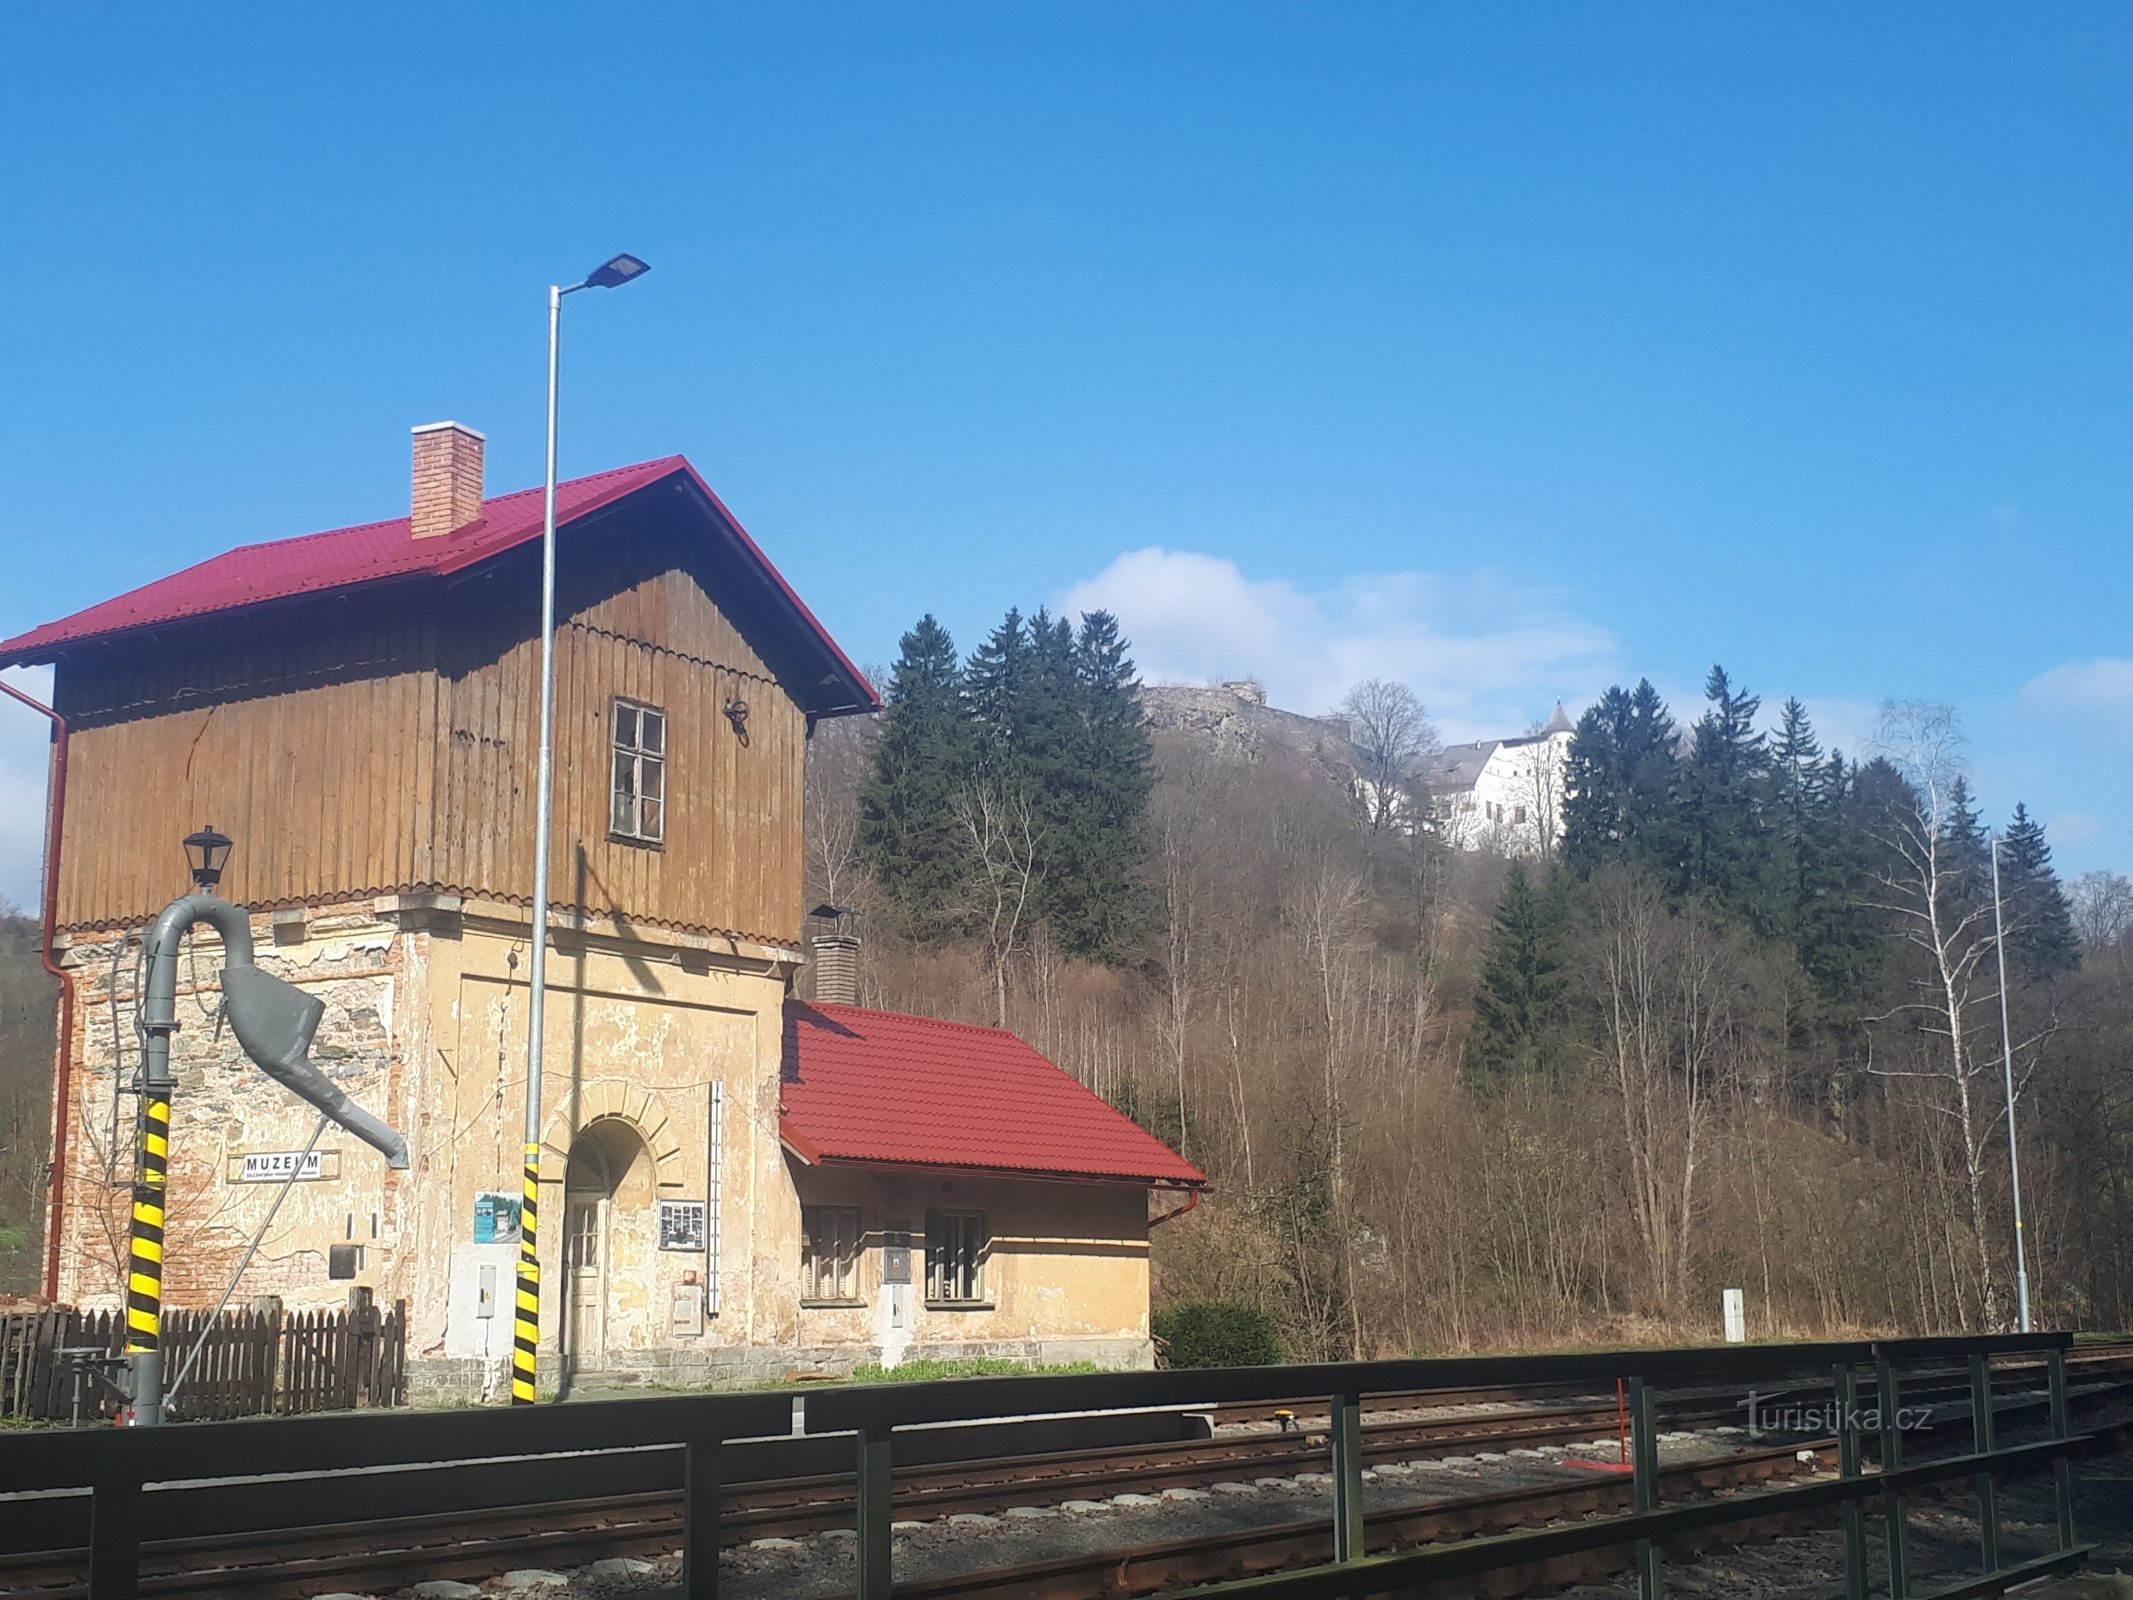 Branná train station